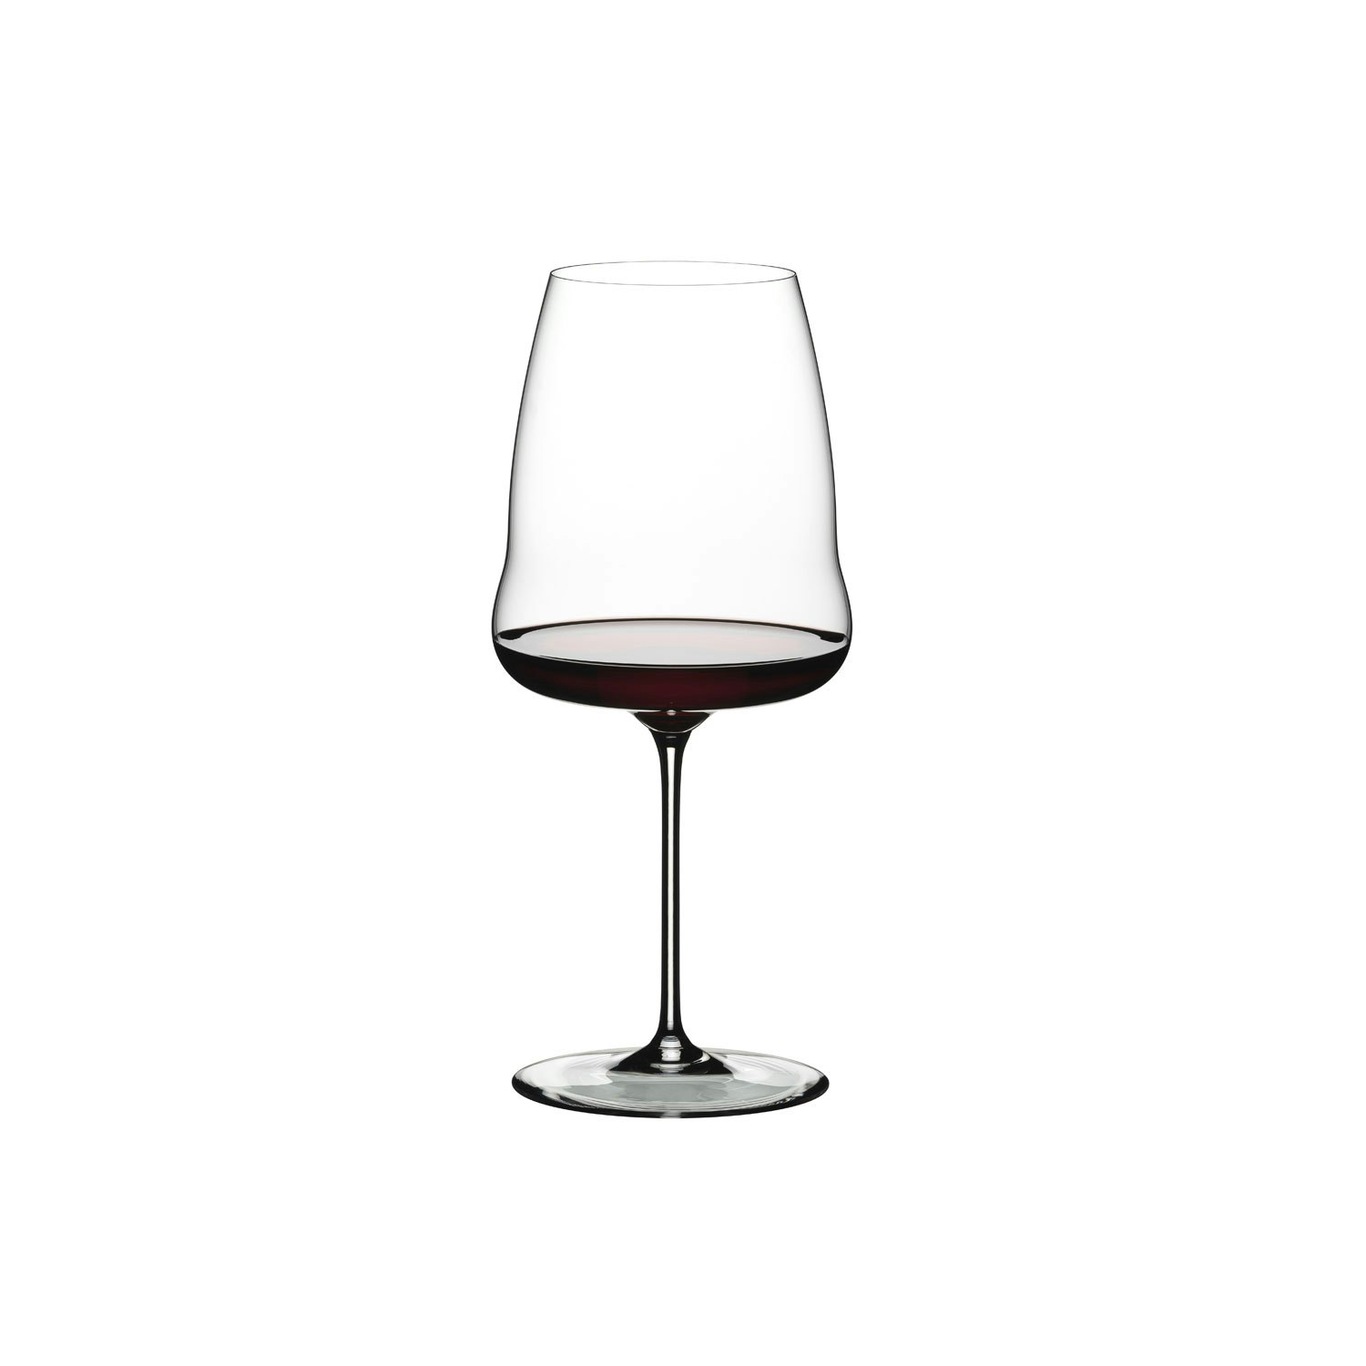 https://royaldesign.com/image/11/riedel-winewings-syrah-shiraz-wine-glass-0?w=800&quality=80